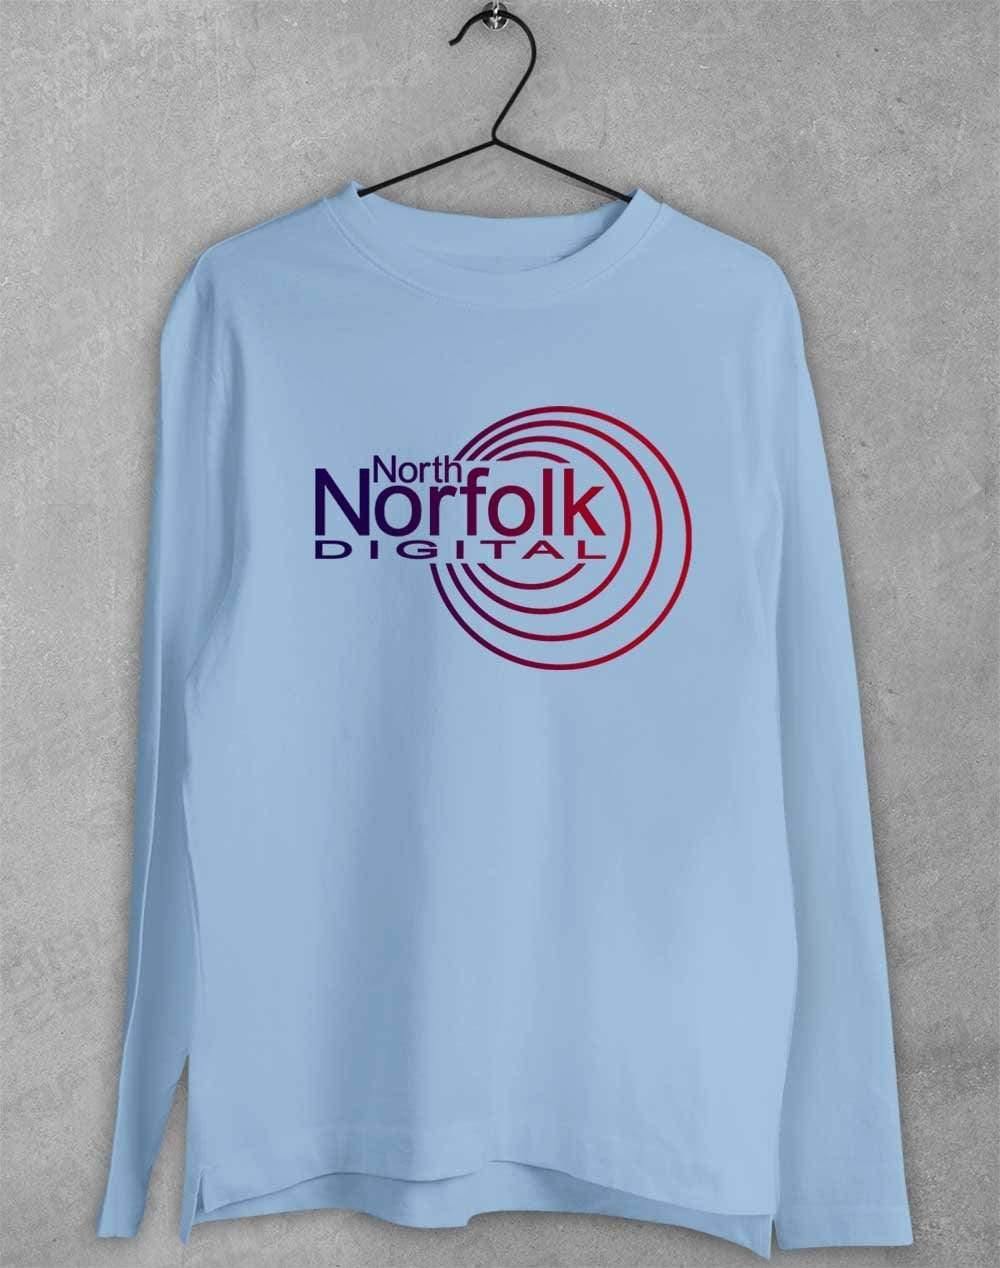 North Norfolk Digital Long Sleeve T-Shirt S / Light Blue  - Off World Tees